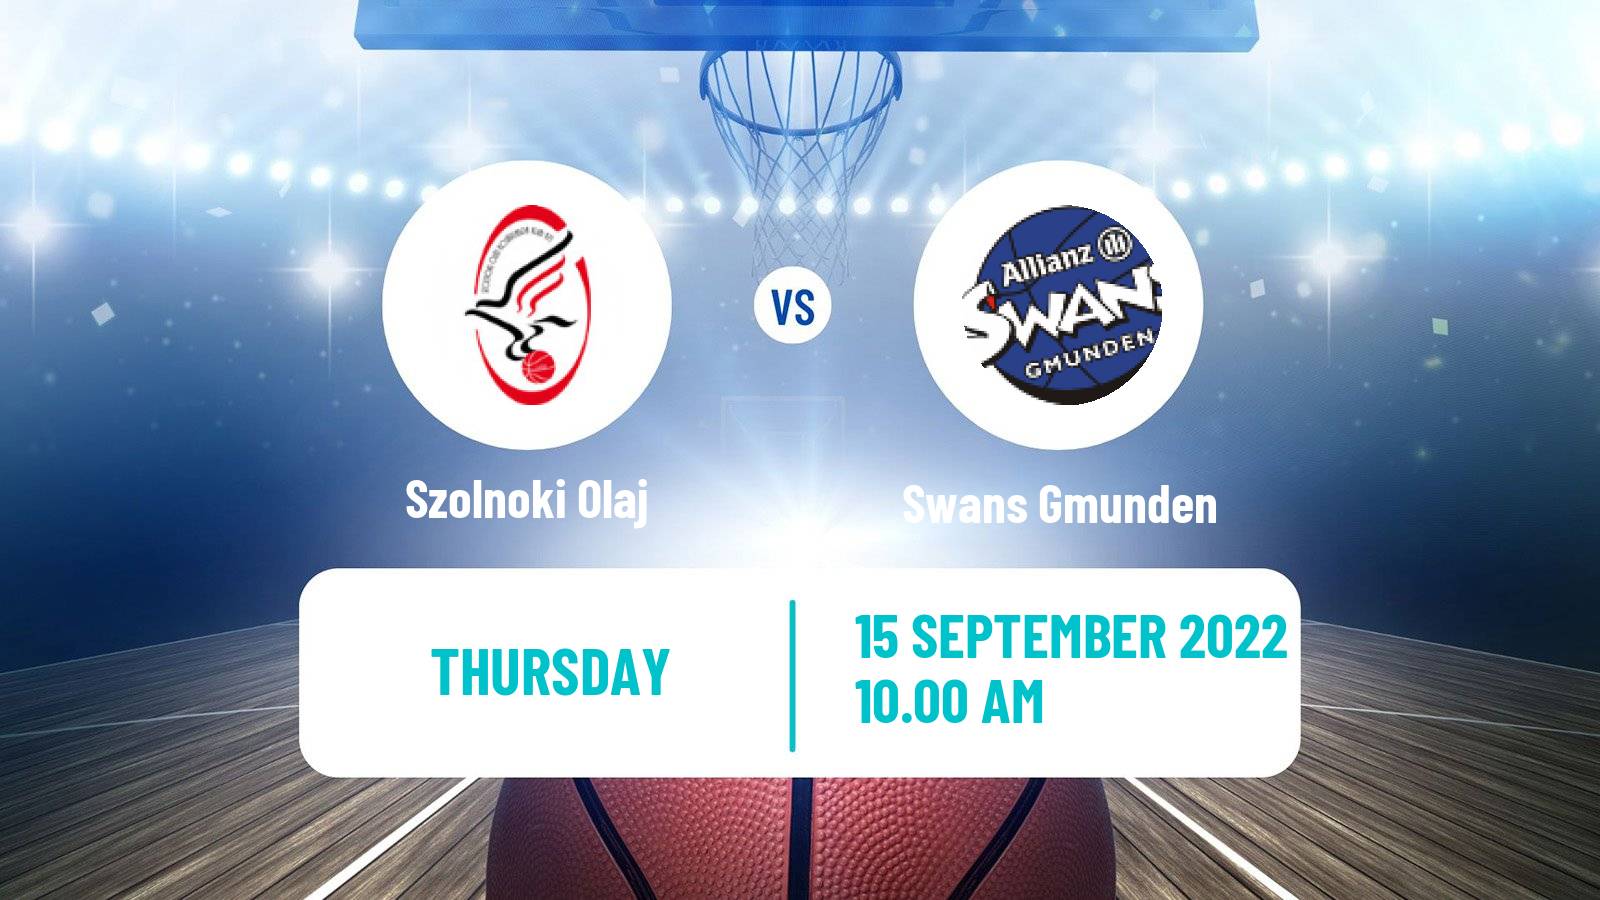 Basketball Club Friendly Basketball Szolnoki Olaj - Swans Gmunden